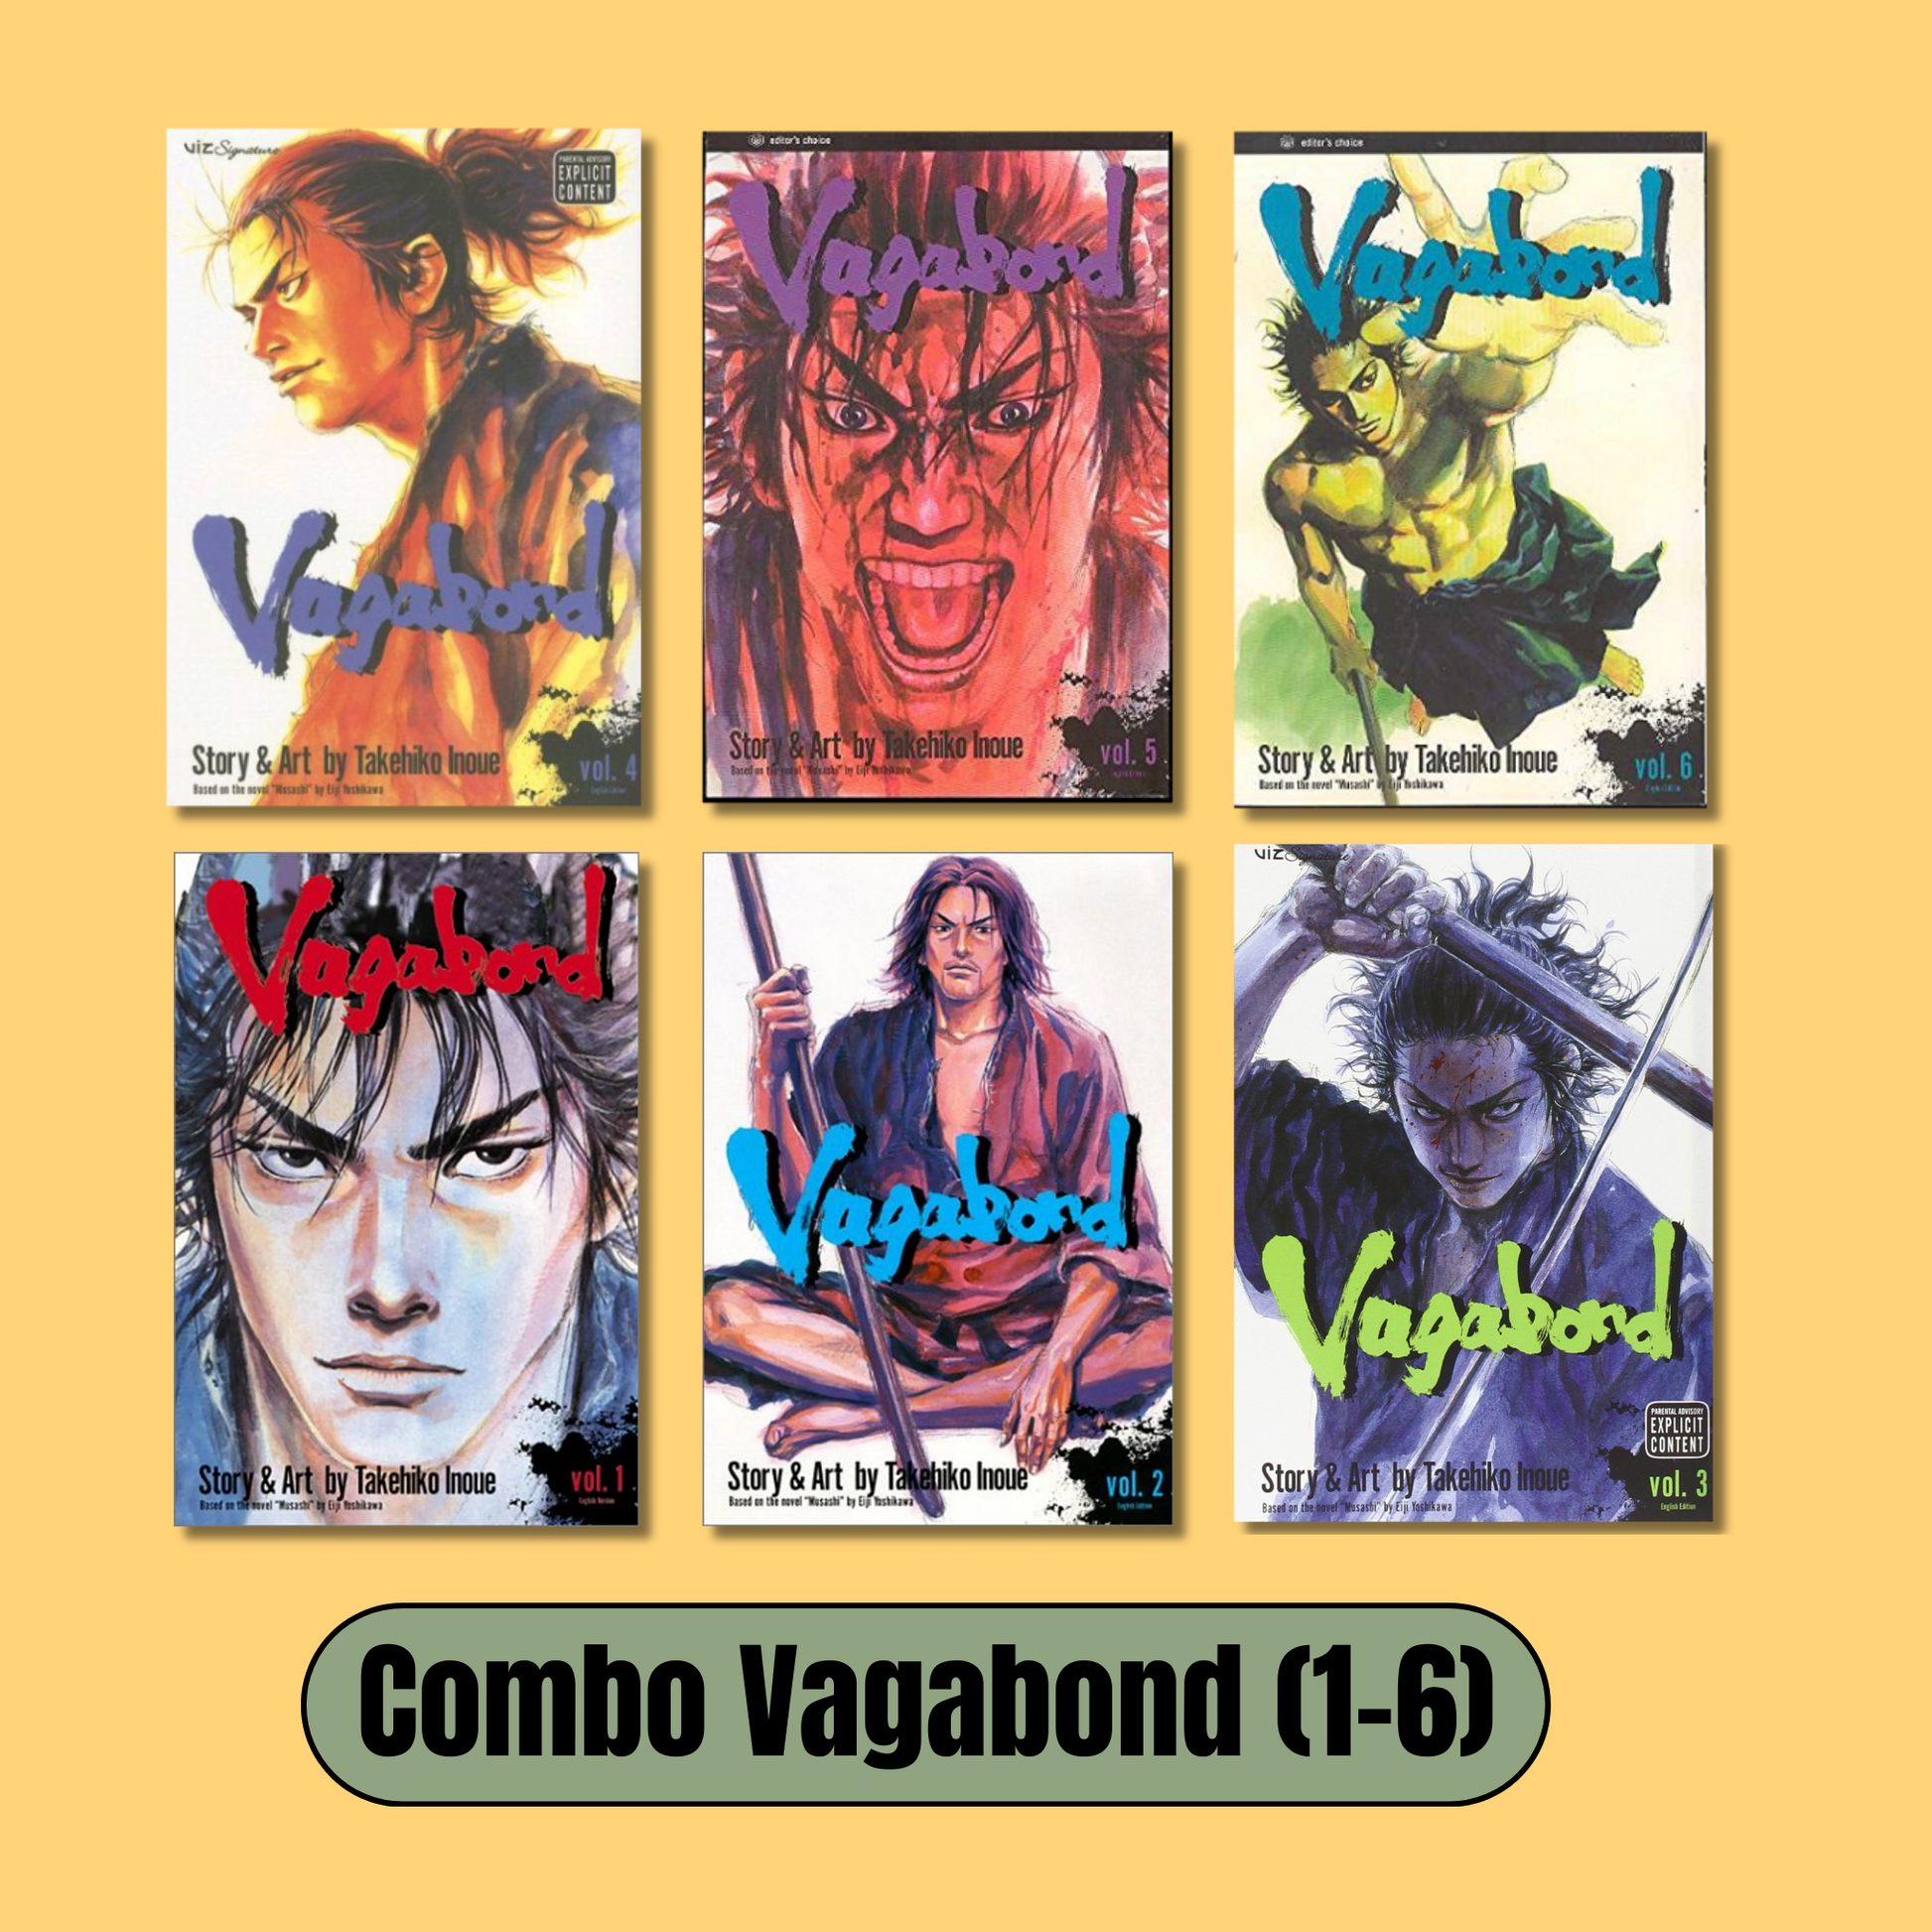 Combo] Vagabond: Vol 1-6 By Takehiko Inoue (Paperback) - Gyaanstore